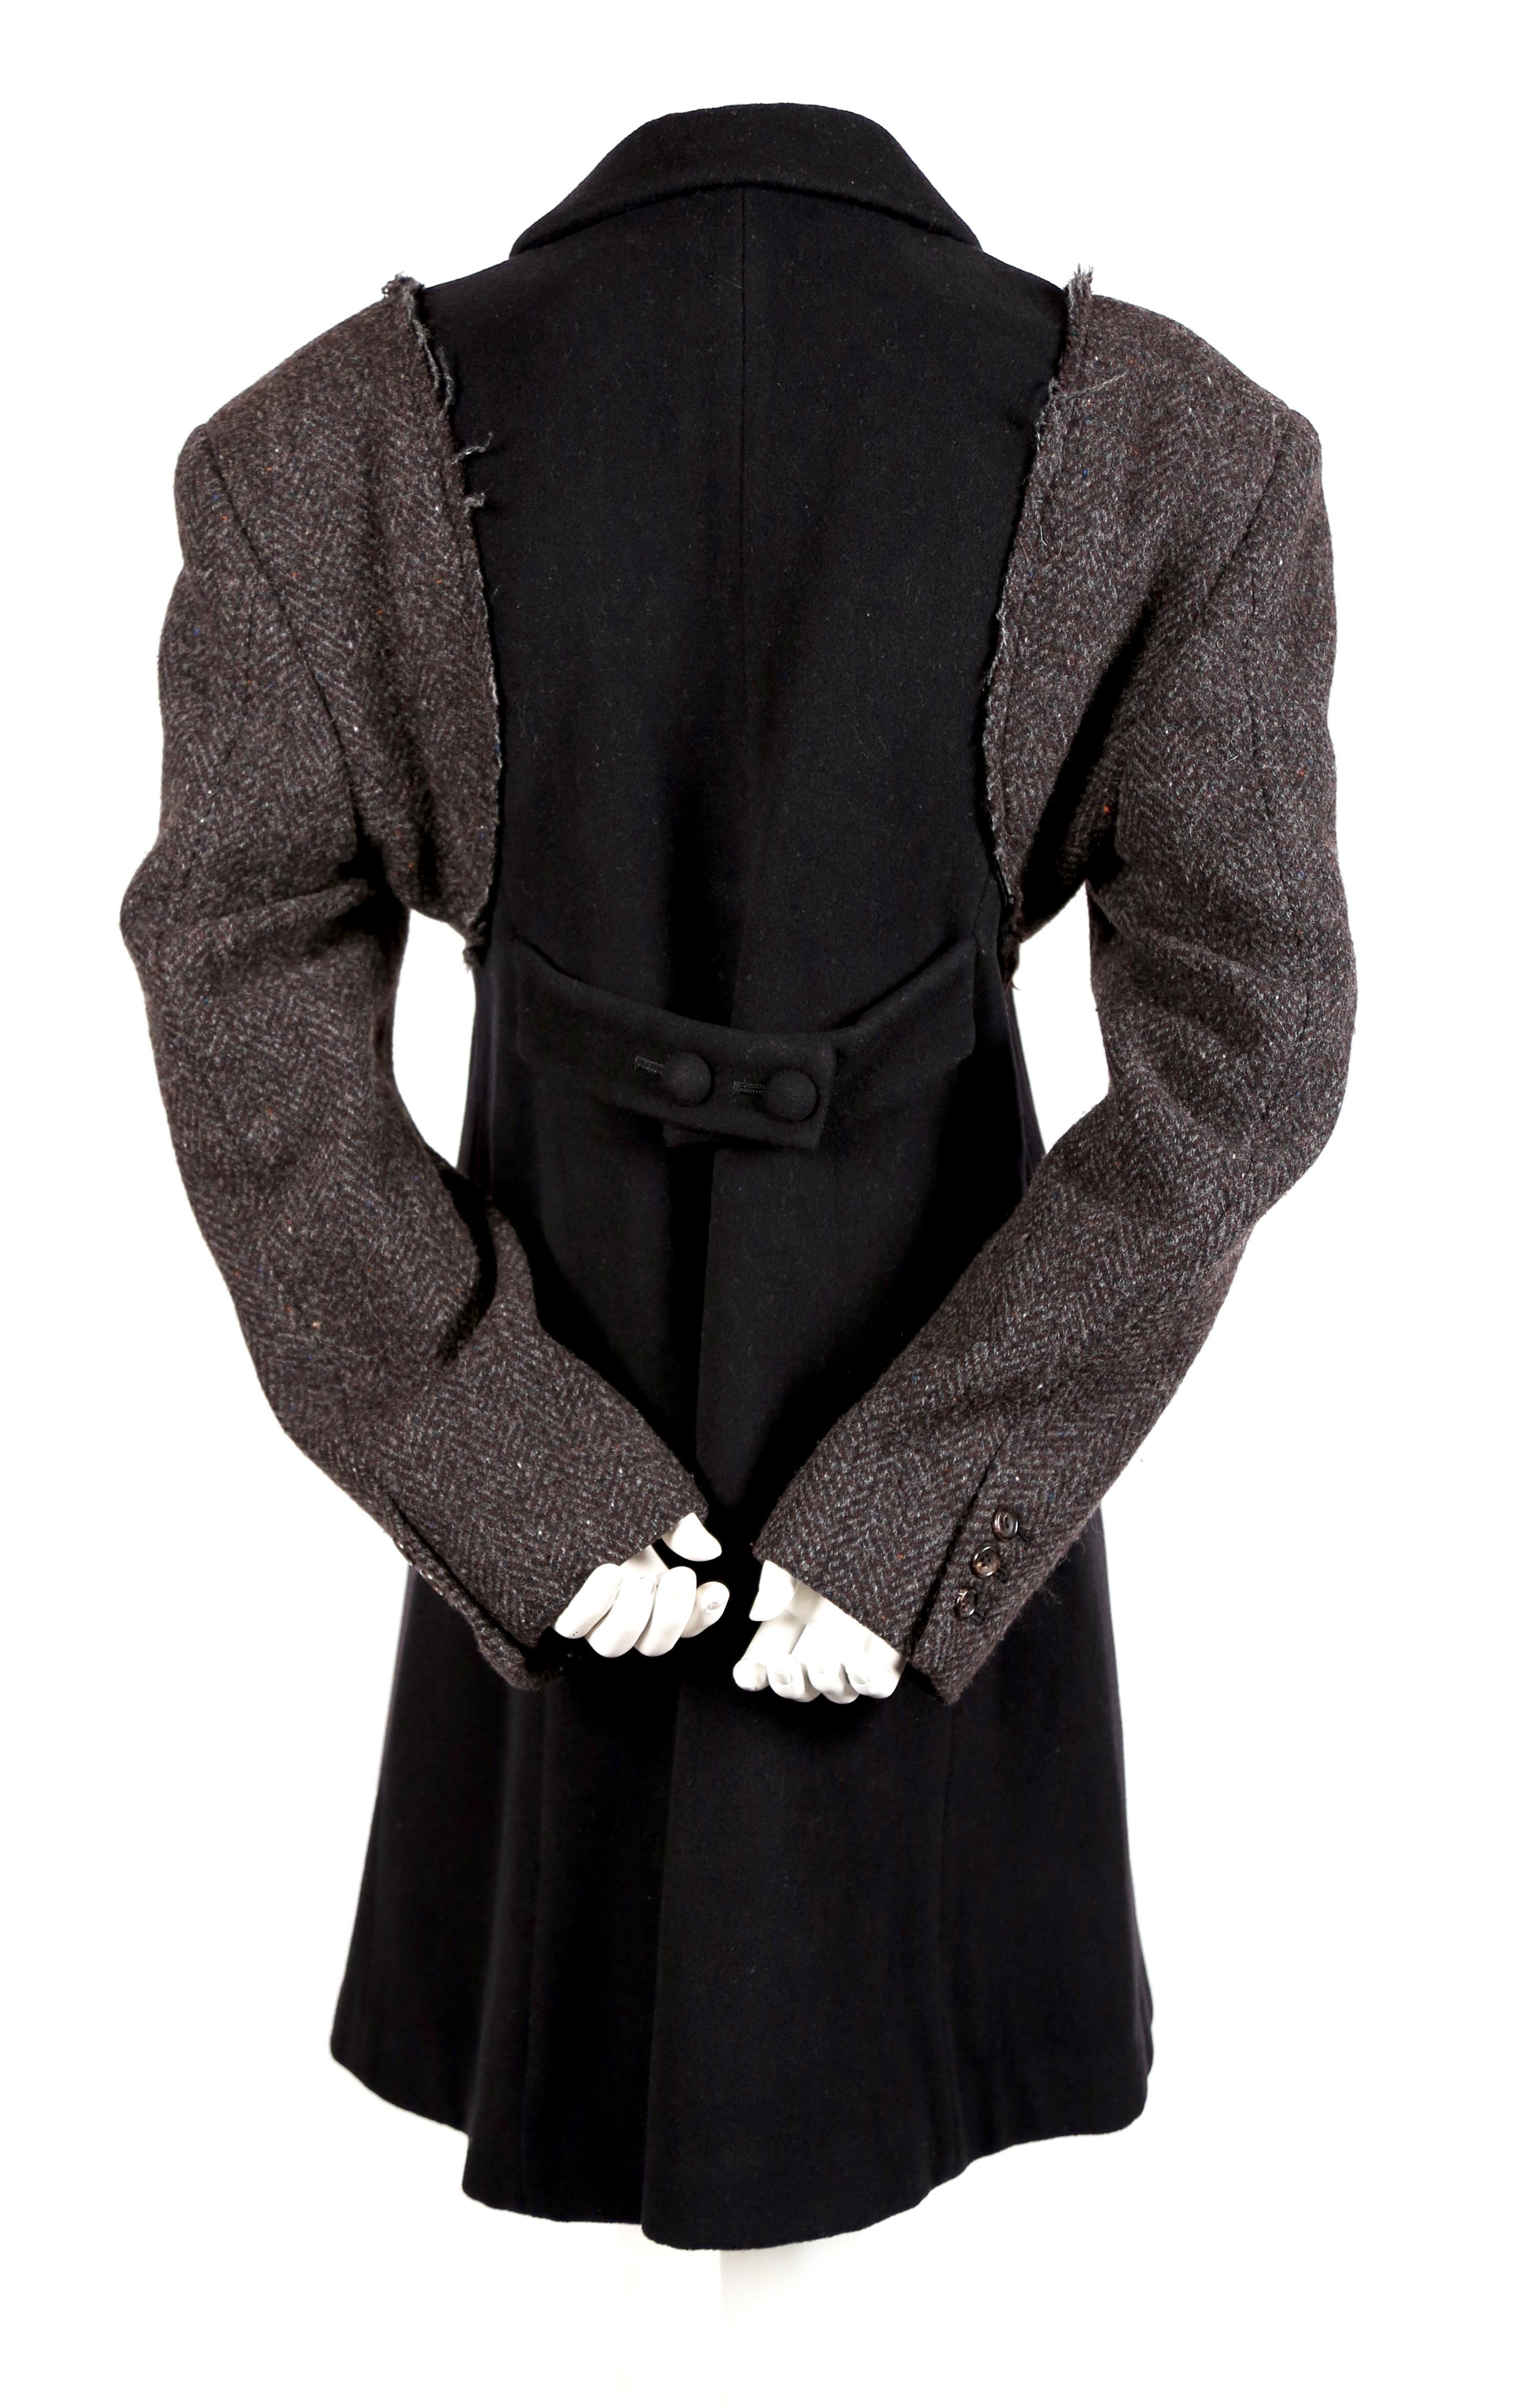 crombie coat 1970s